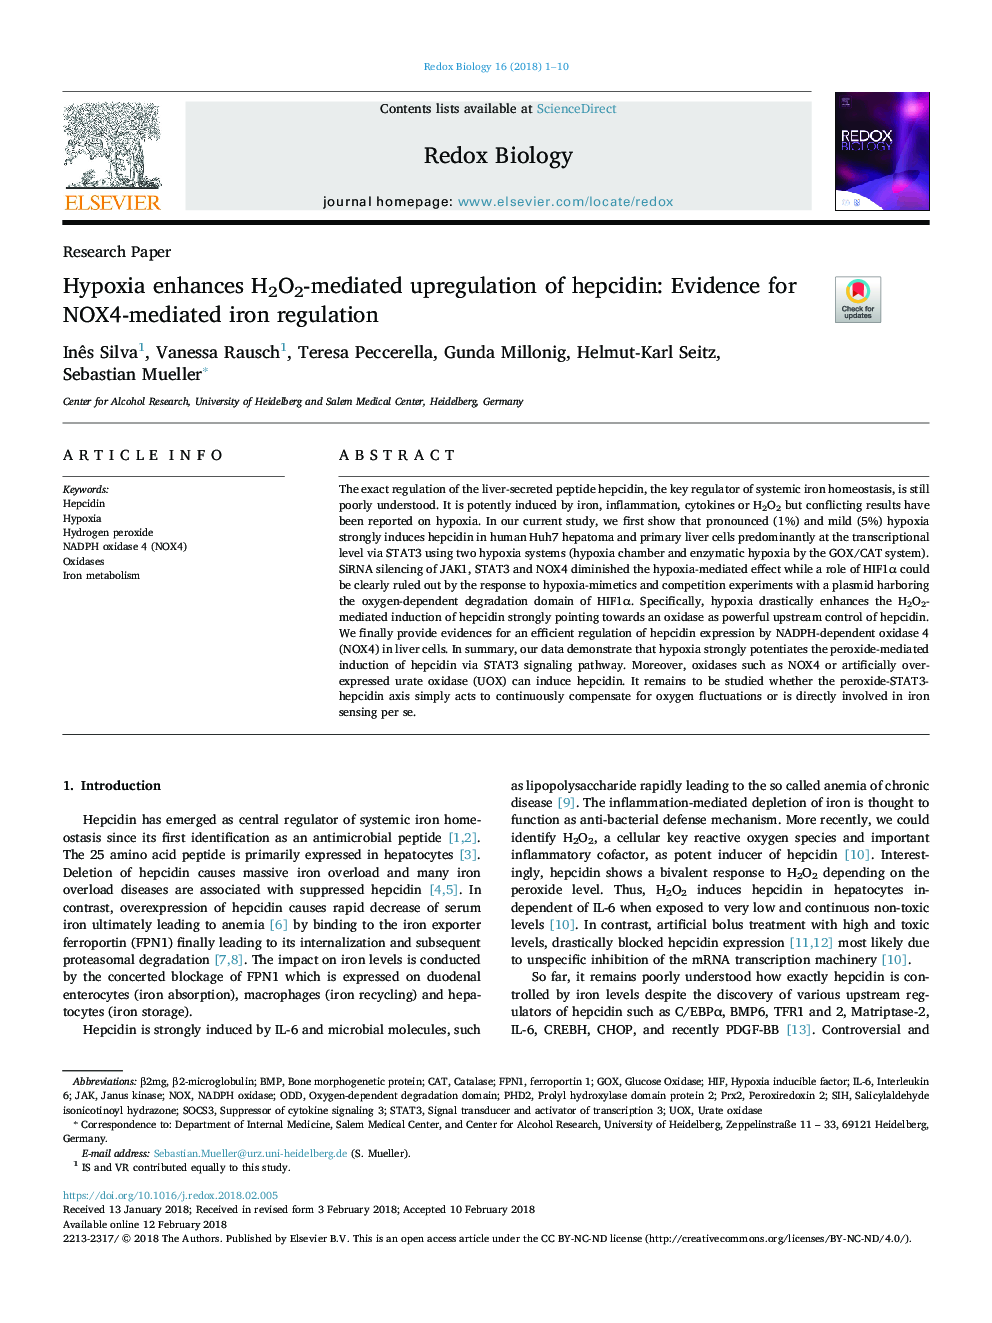 Hypoxia enhances H2O2-mediated upregulation of hepcidin: Evidence for NOX4-mediated iron regulation